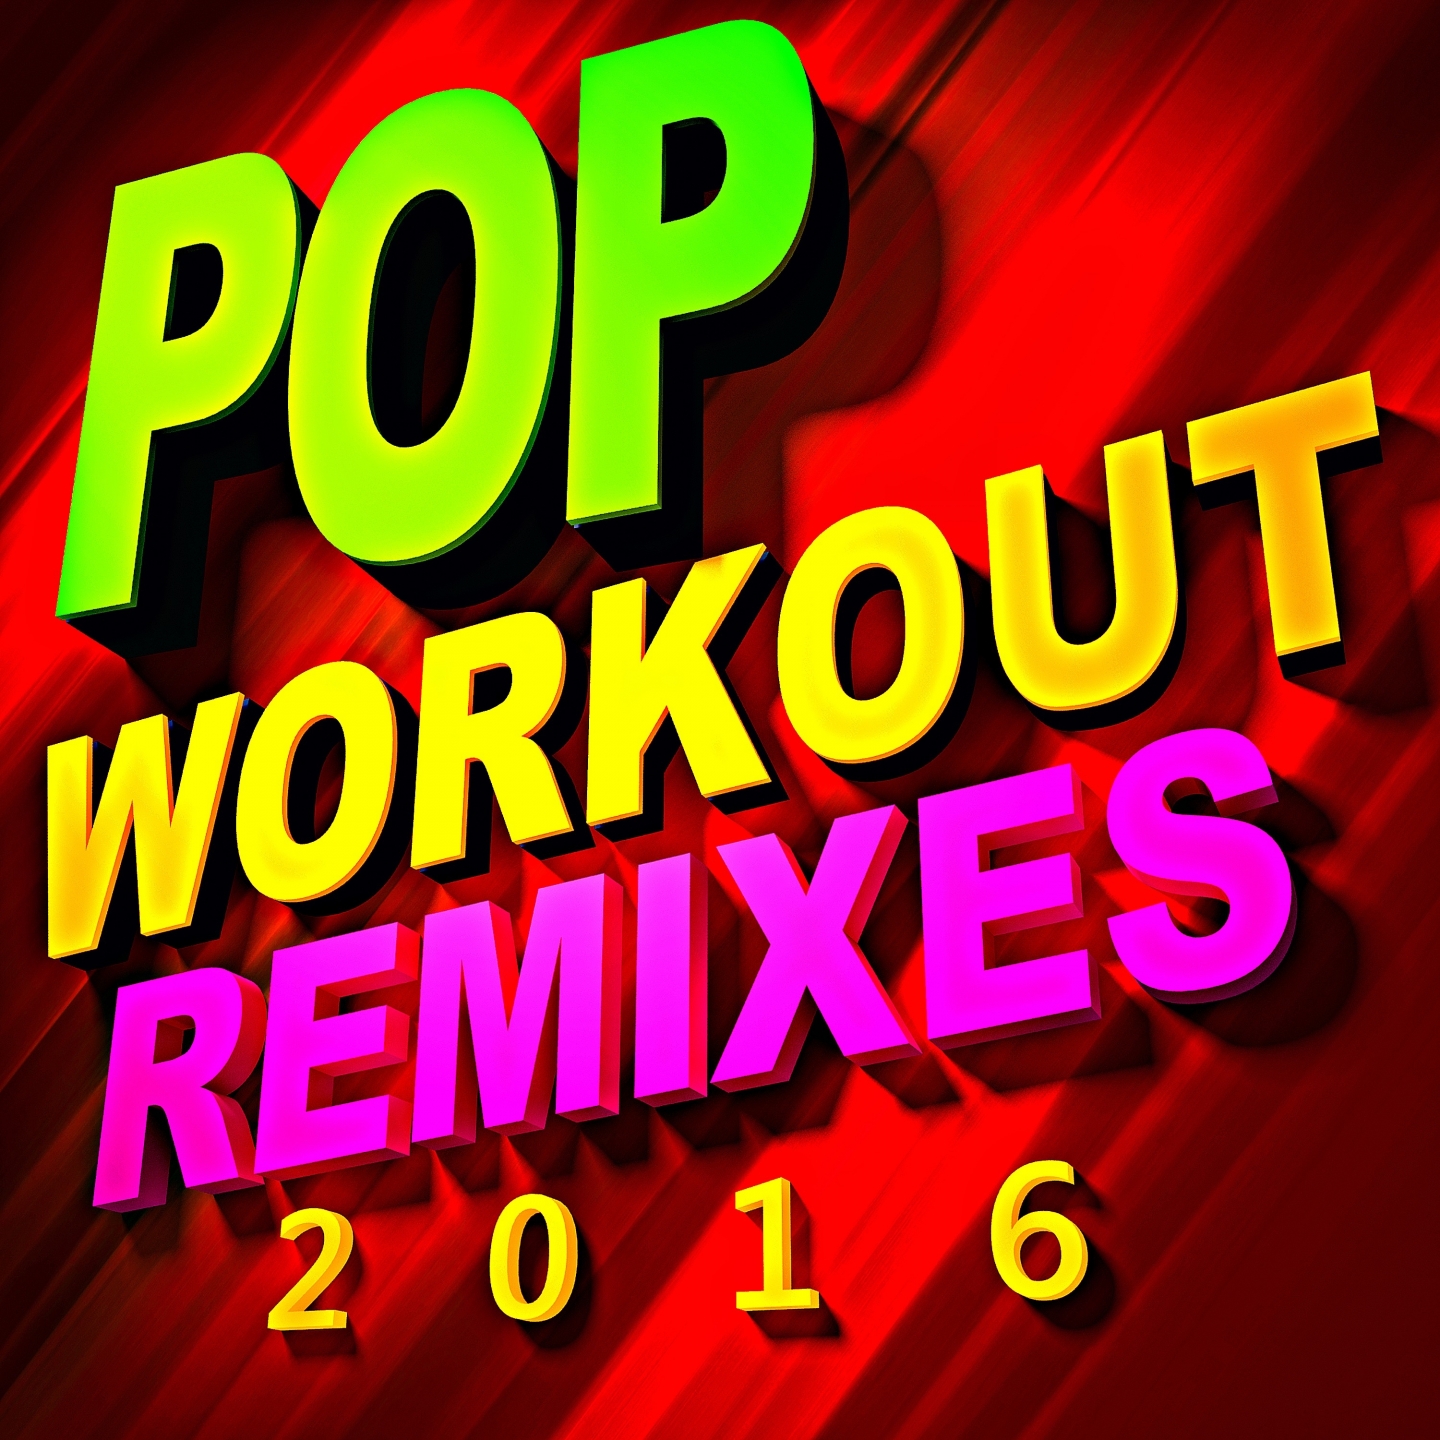 Cheap Thrills (Workout Mix) [Radio Edit]